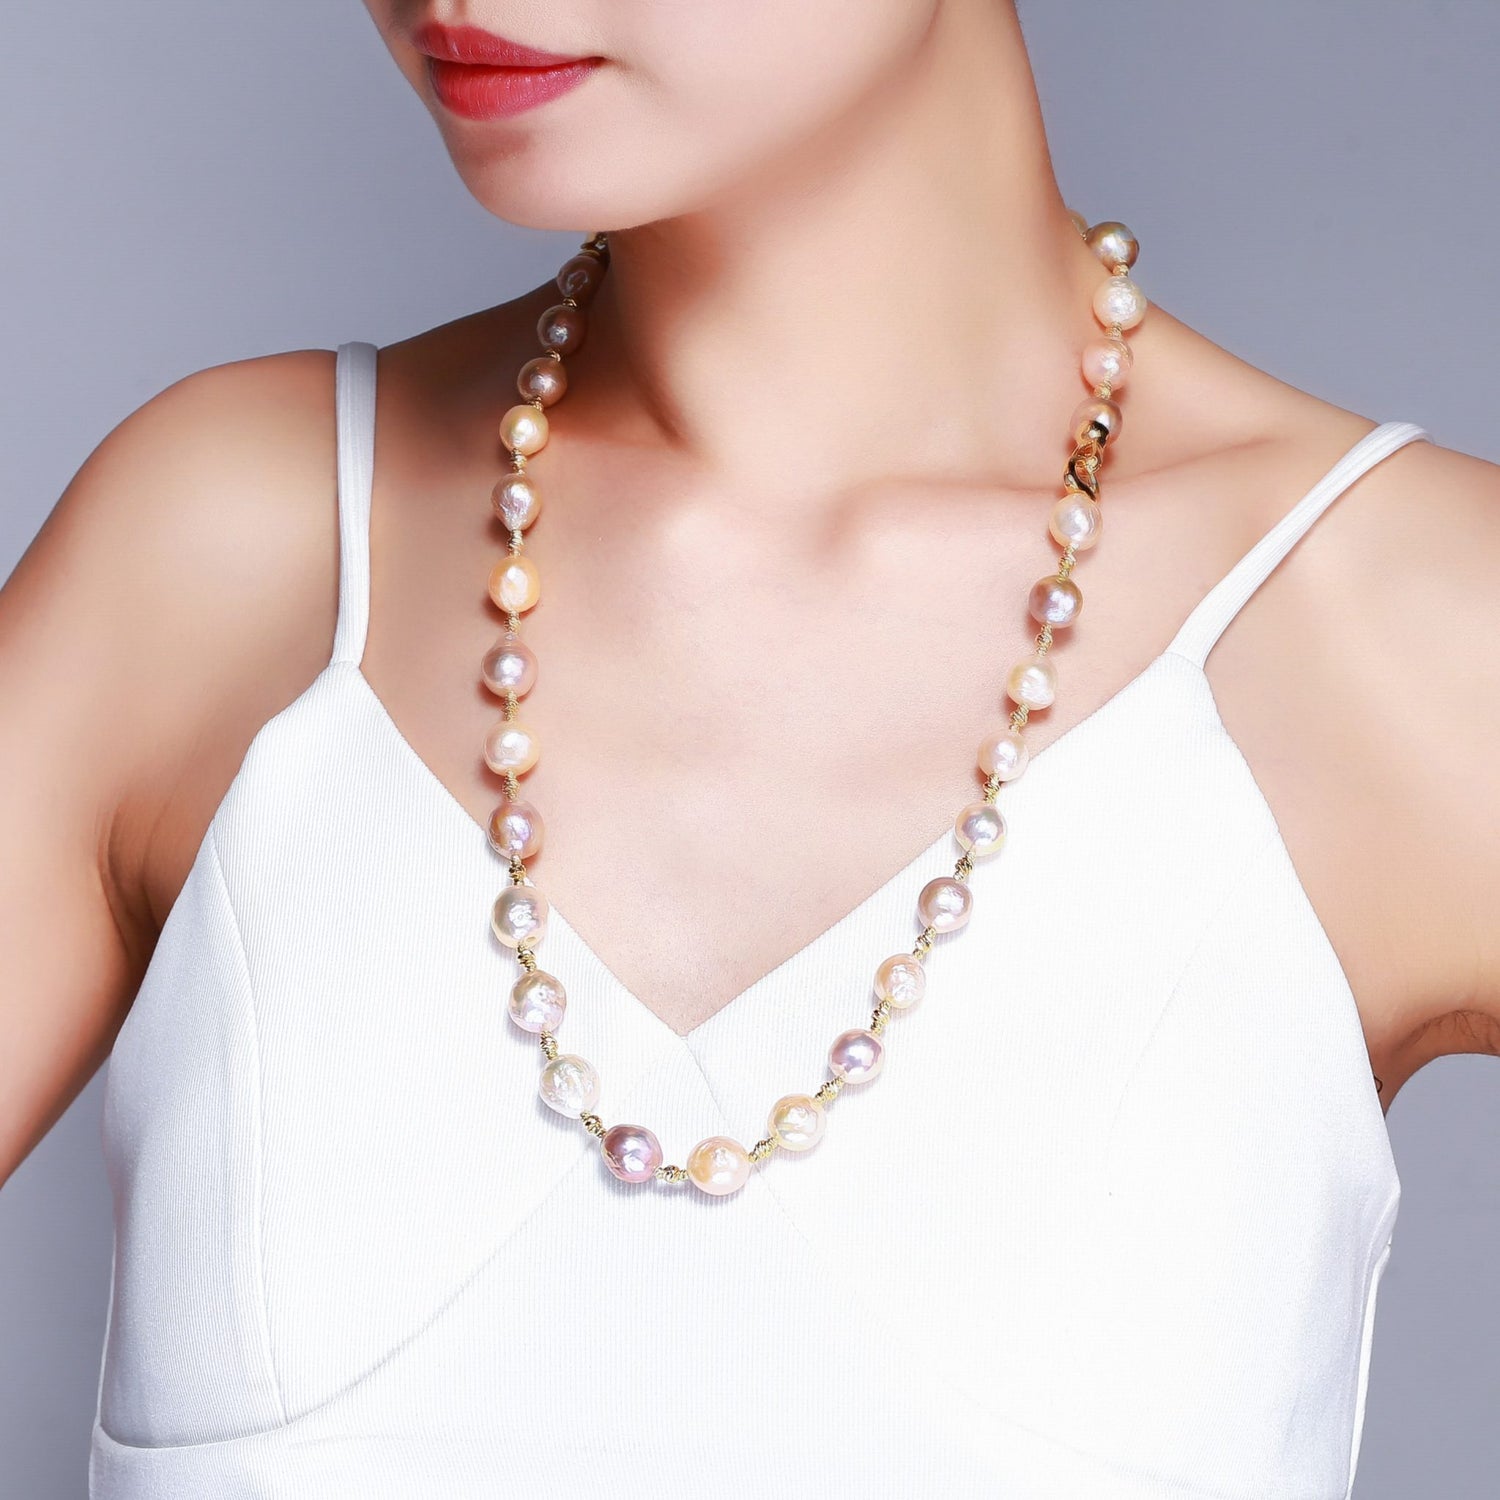 Golden Baroque Edison Pearl Necklace & Bracelet Set - Timeless Pearl